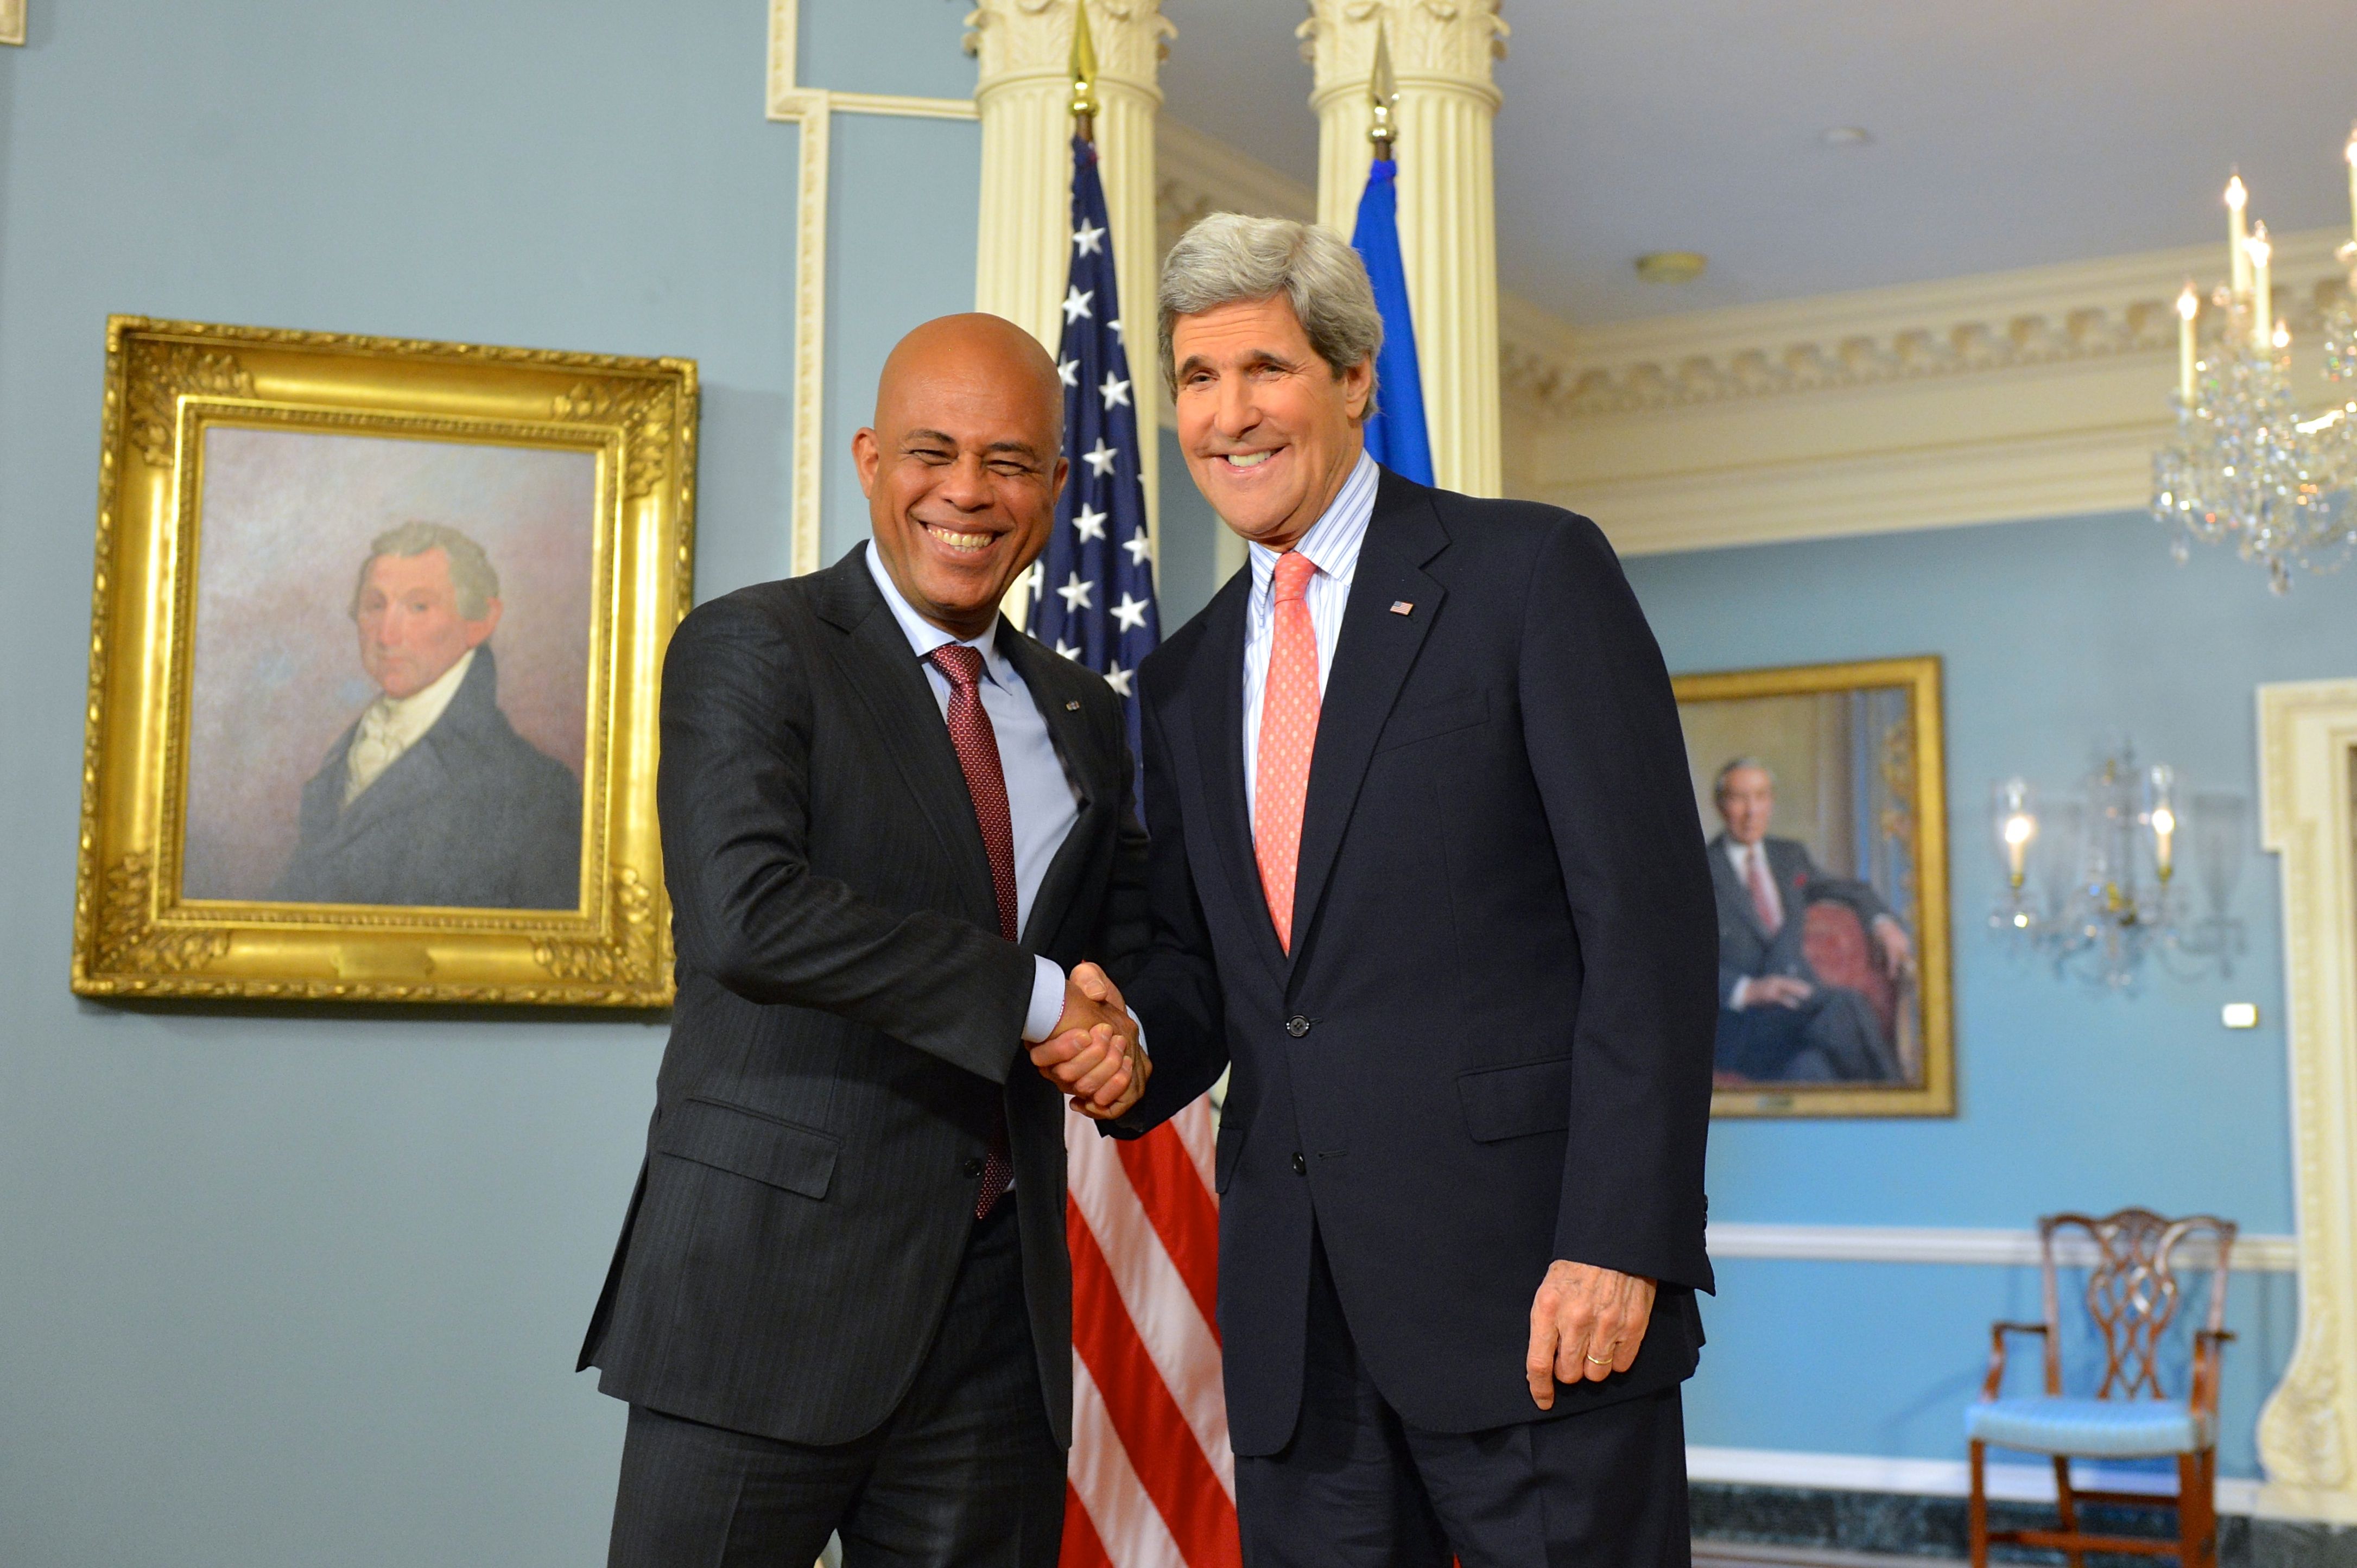 Michel Martelly, atual presidente do Haiti, cumprimenta o Secretário de Estado norte-americano John Kerry durante visita a Washington em fevereiro de 2014